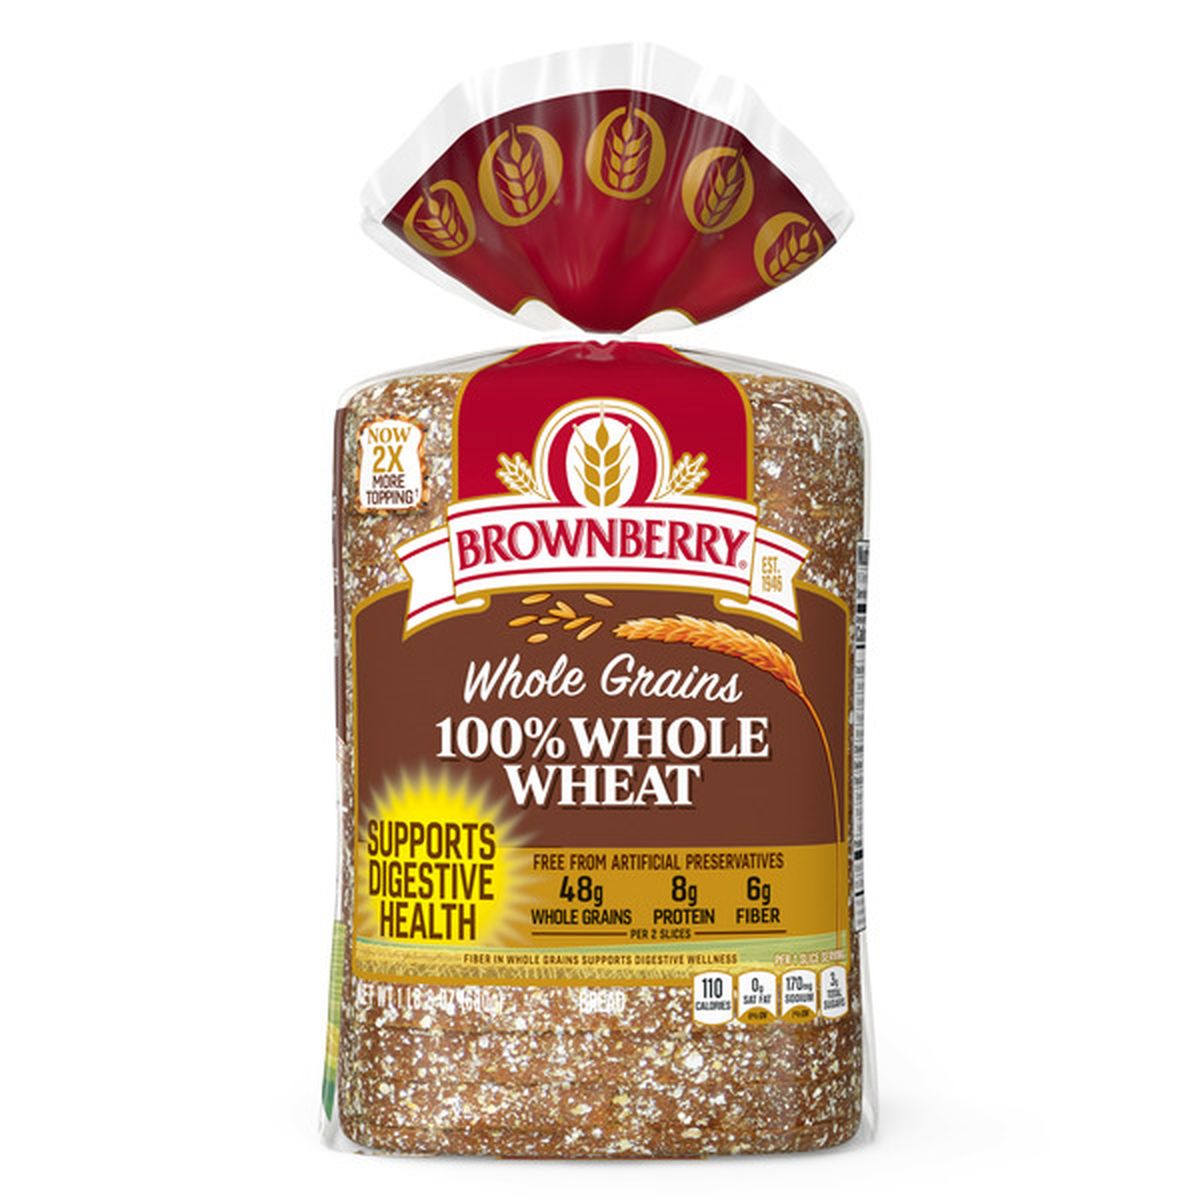 Sara Lee Sara Lee 100% Whole Wheat Bread, 16 oz, 12 ct